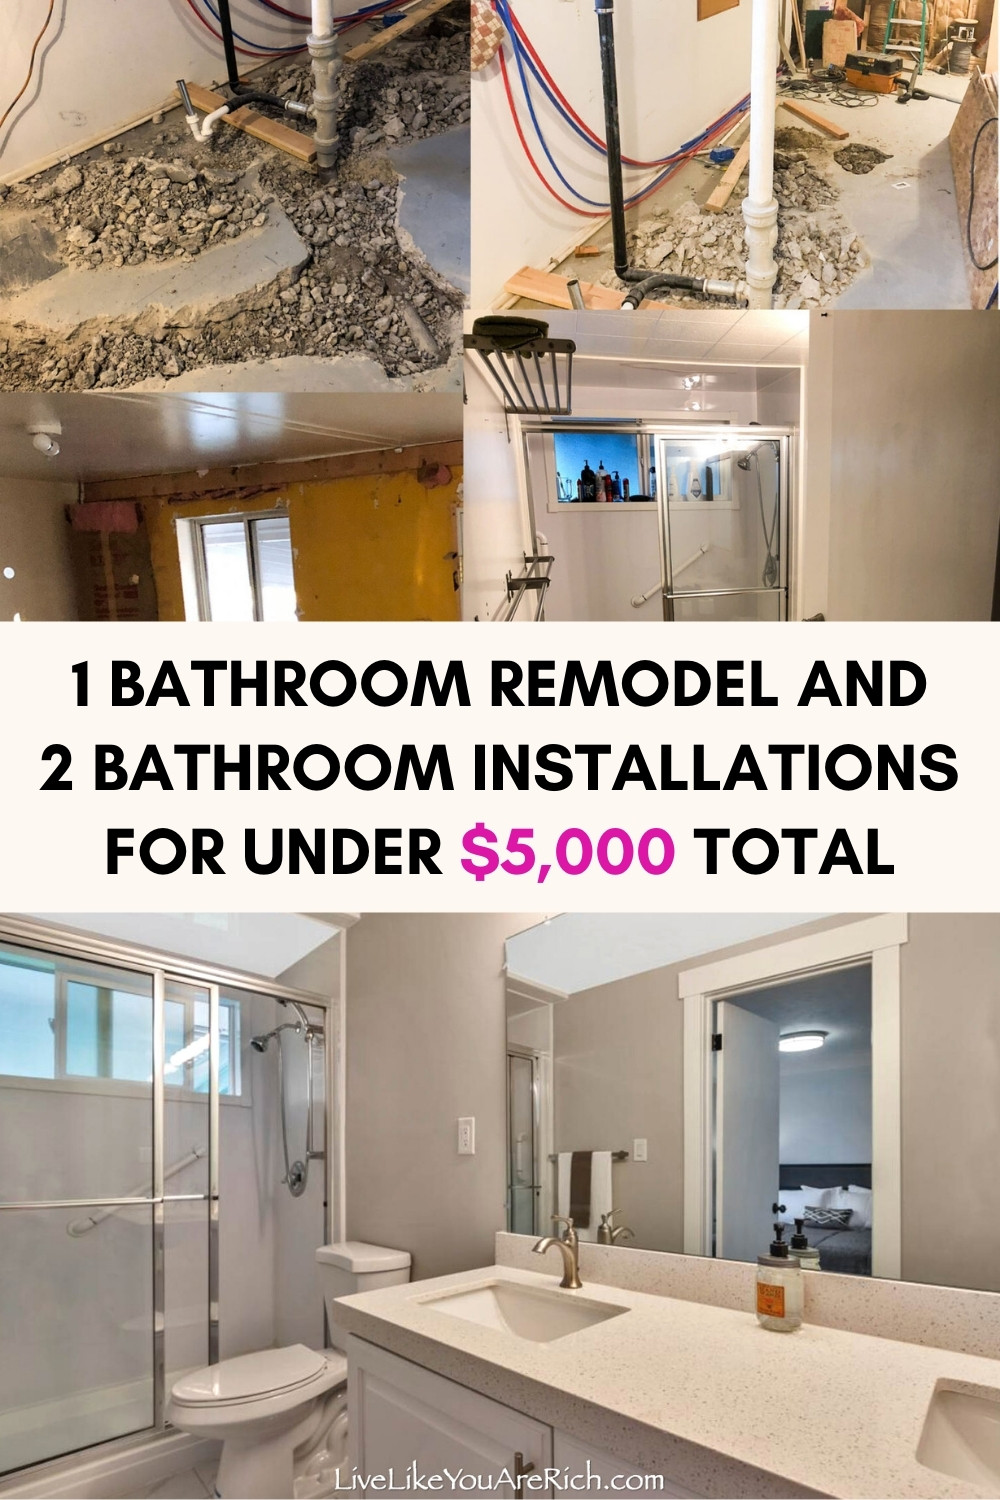 1 Bathroom Remodel and 2 Bathroom Installation on a budget